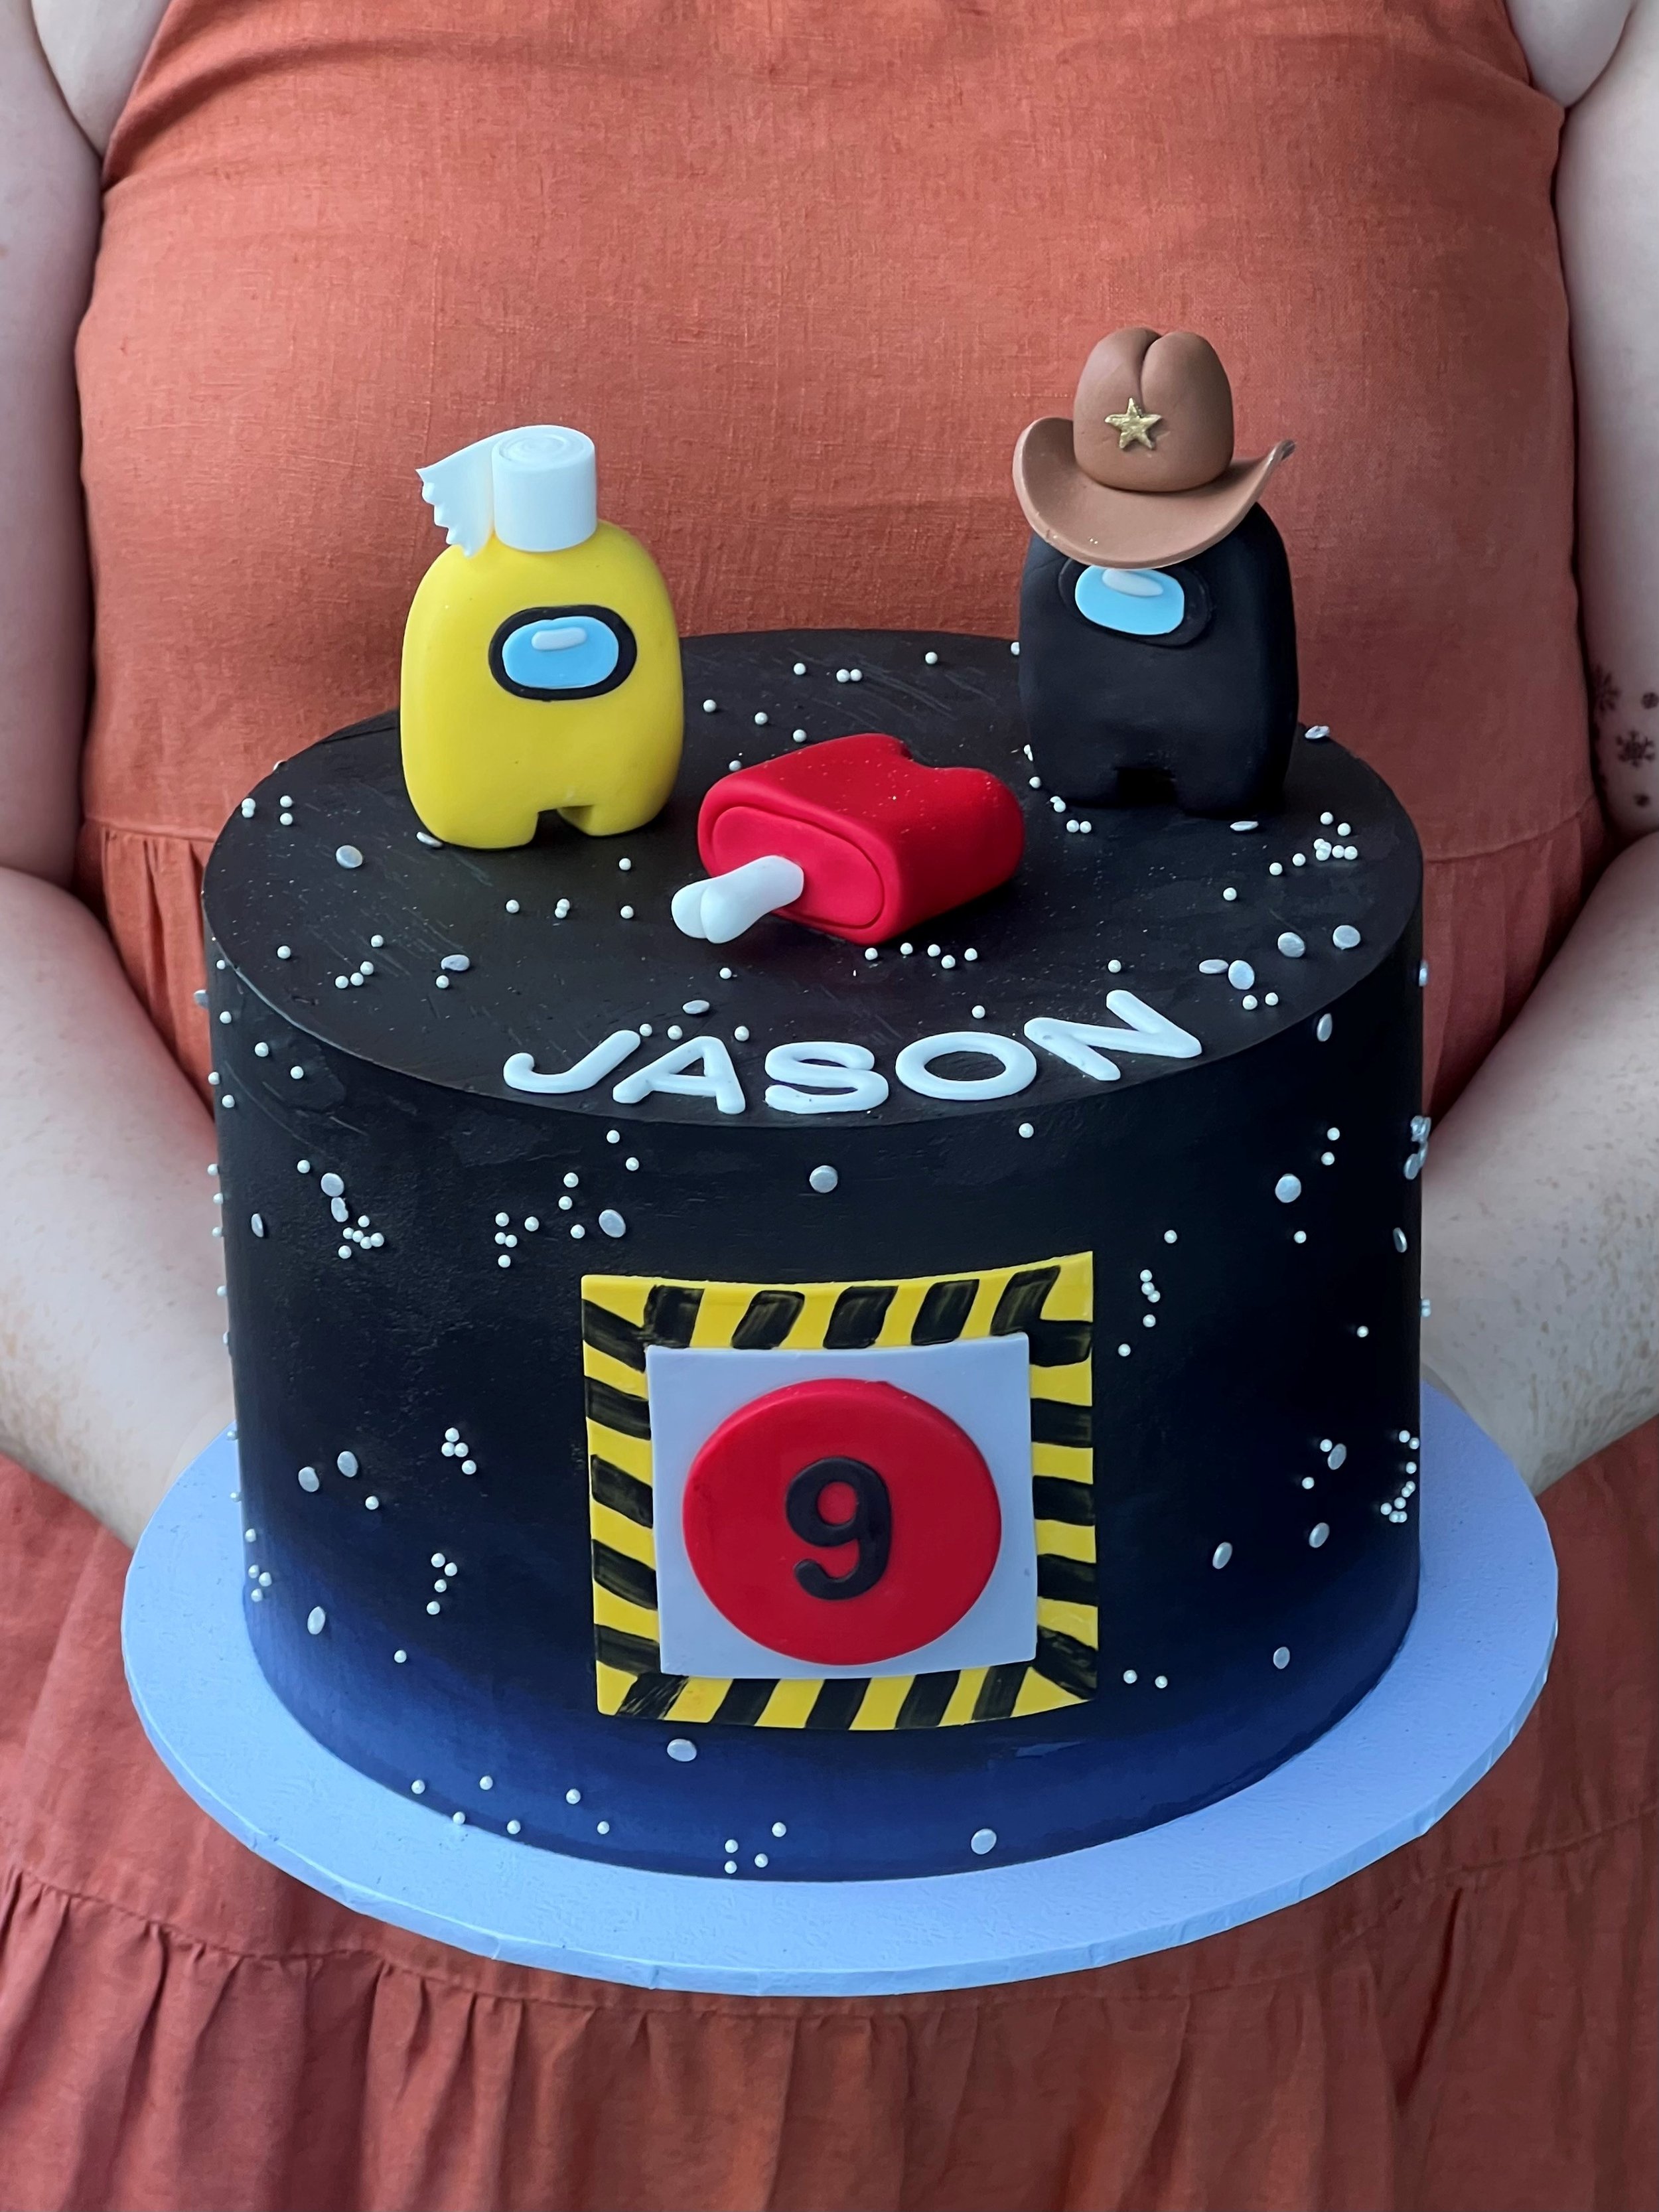 Cake™ by Jason Hisley